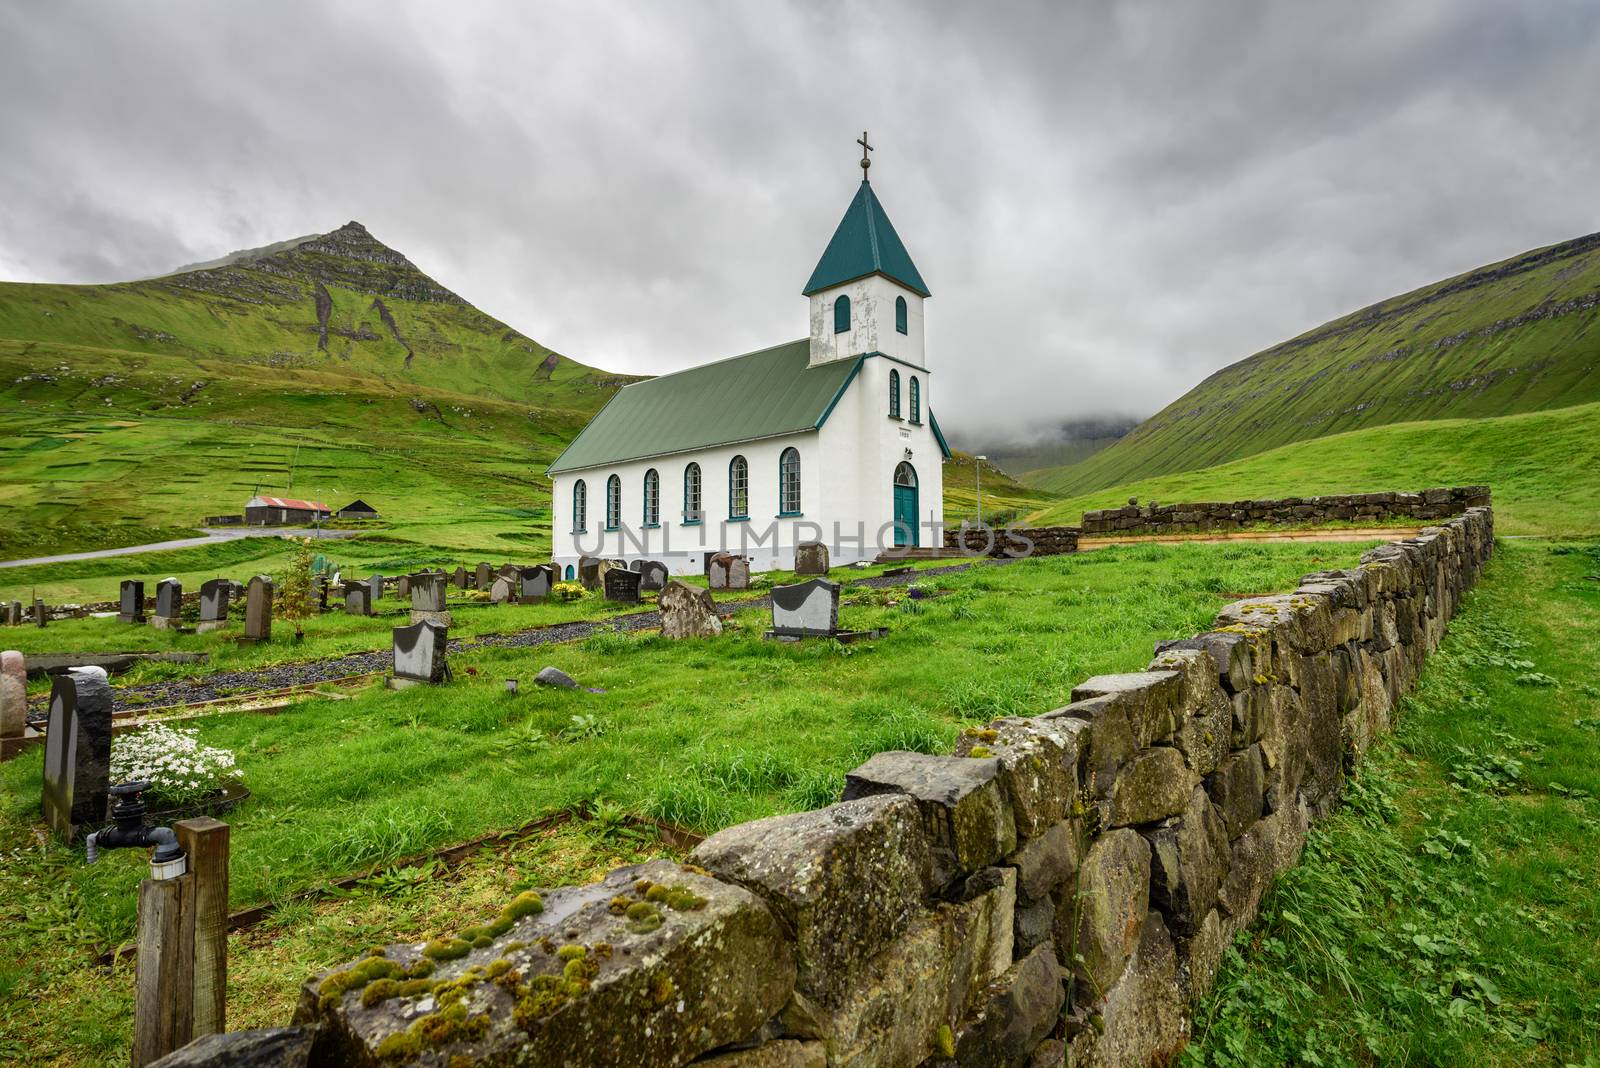 Church with cemetery in Gjogv, Faroe Islands, Denmark by nickfox